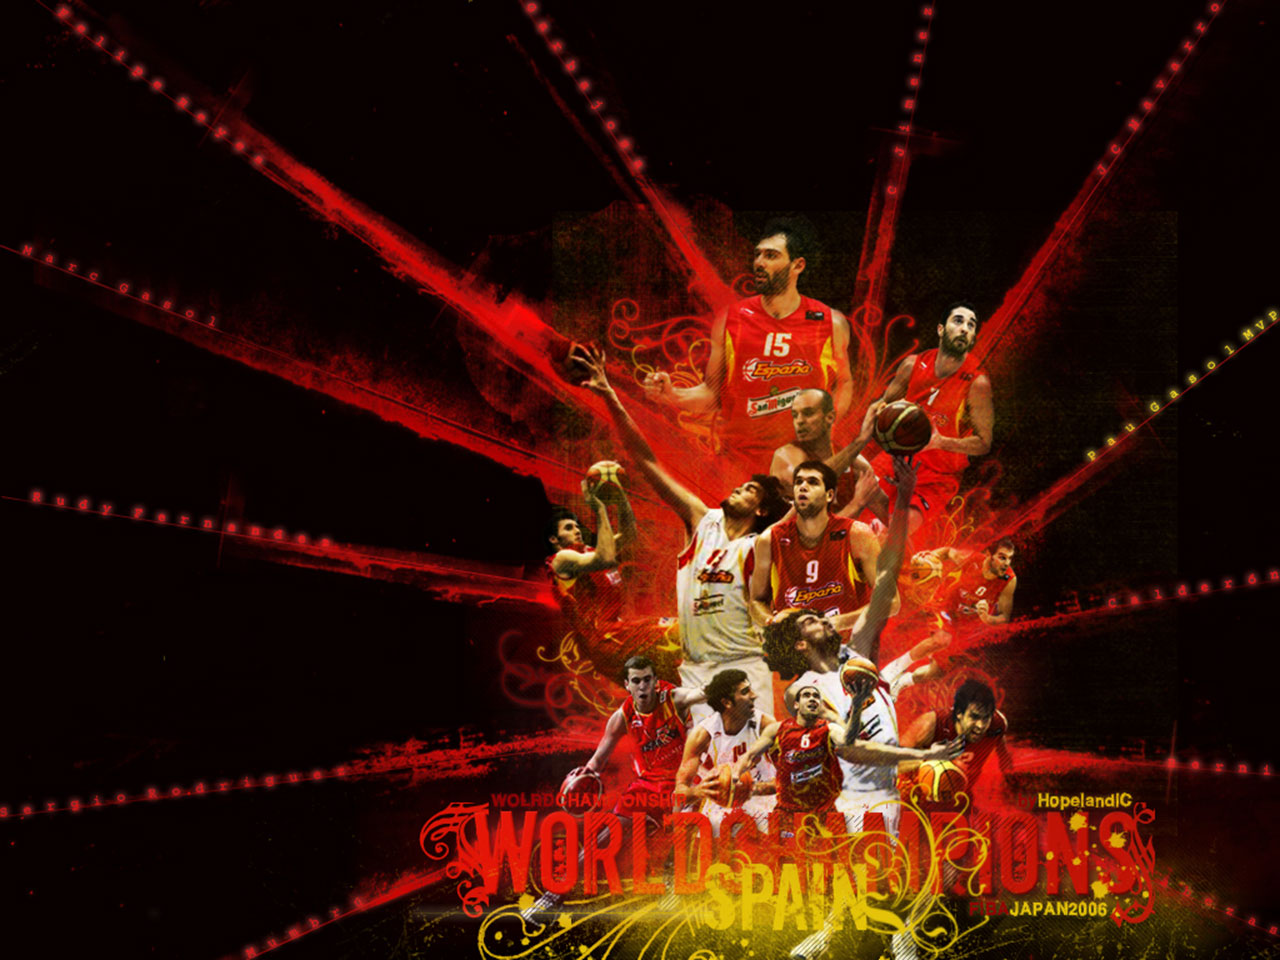 Spain 2006 World Champions Wallpaper | Basketball Wallpapers at BasketWallpapers.com1280 x 960